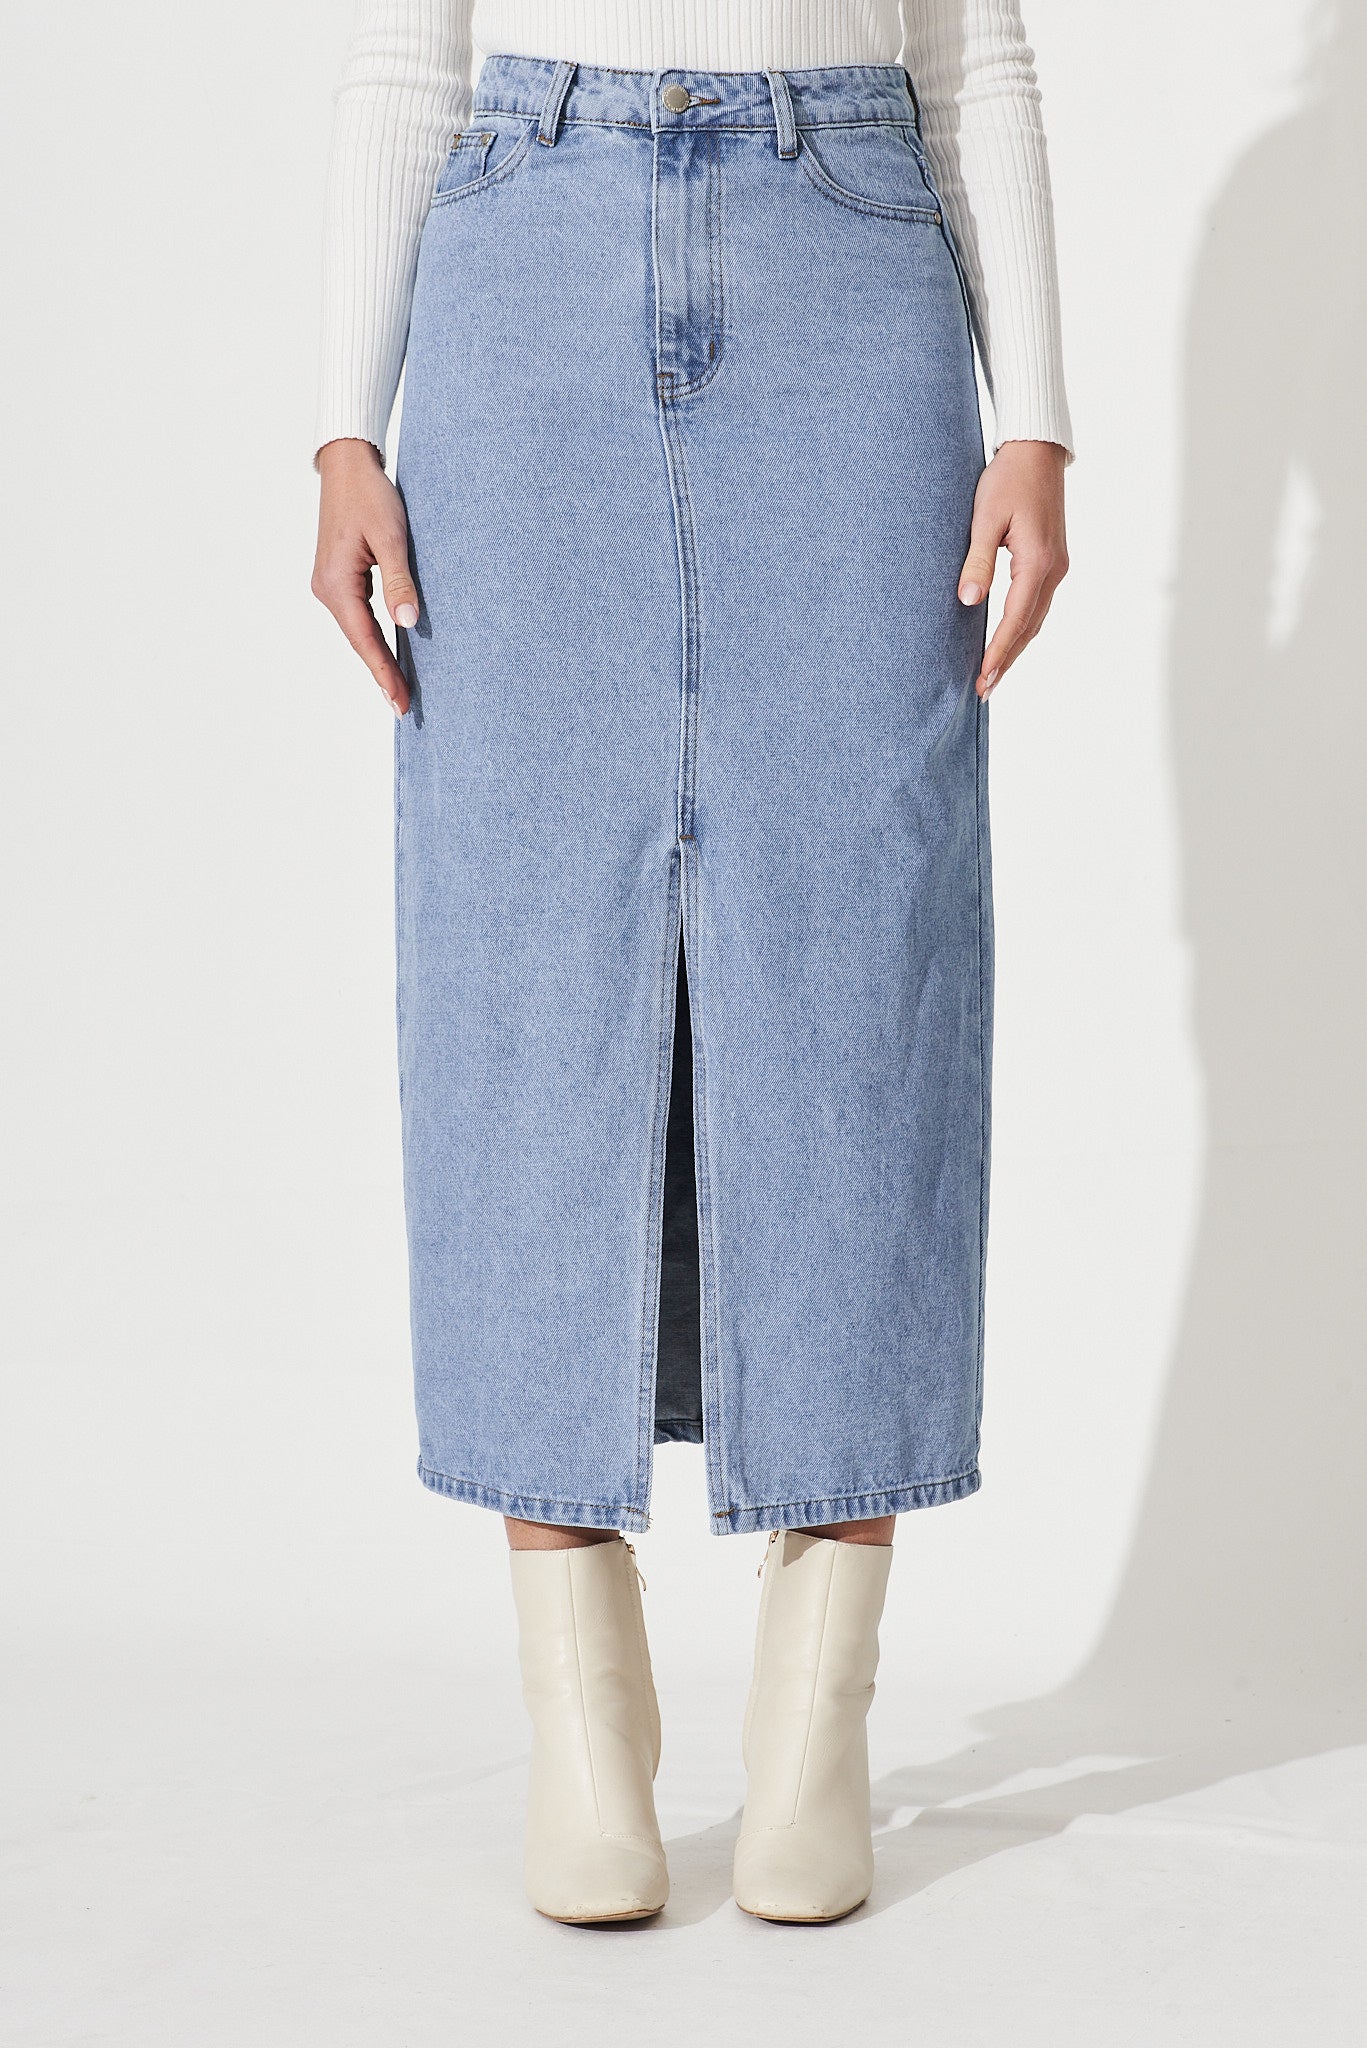 Lattice Maxi Denim Skirt In Light Blue Wash – St Frock